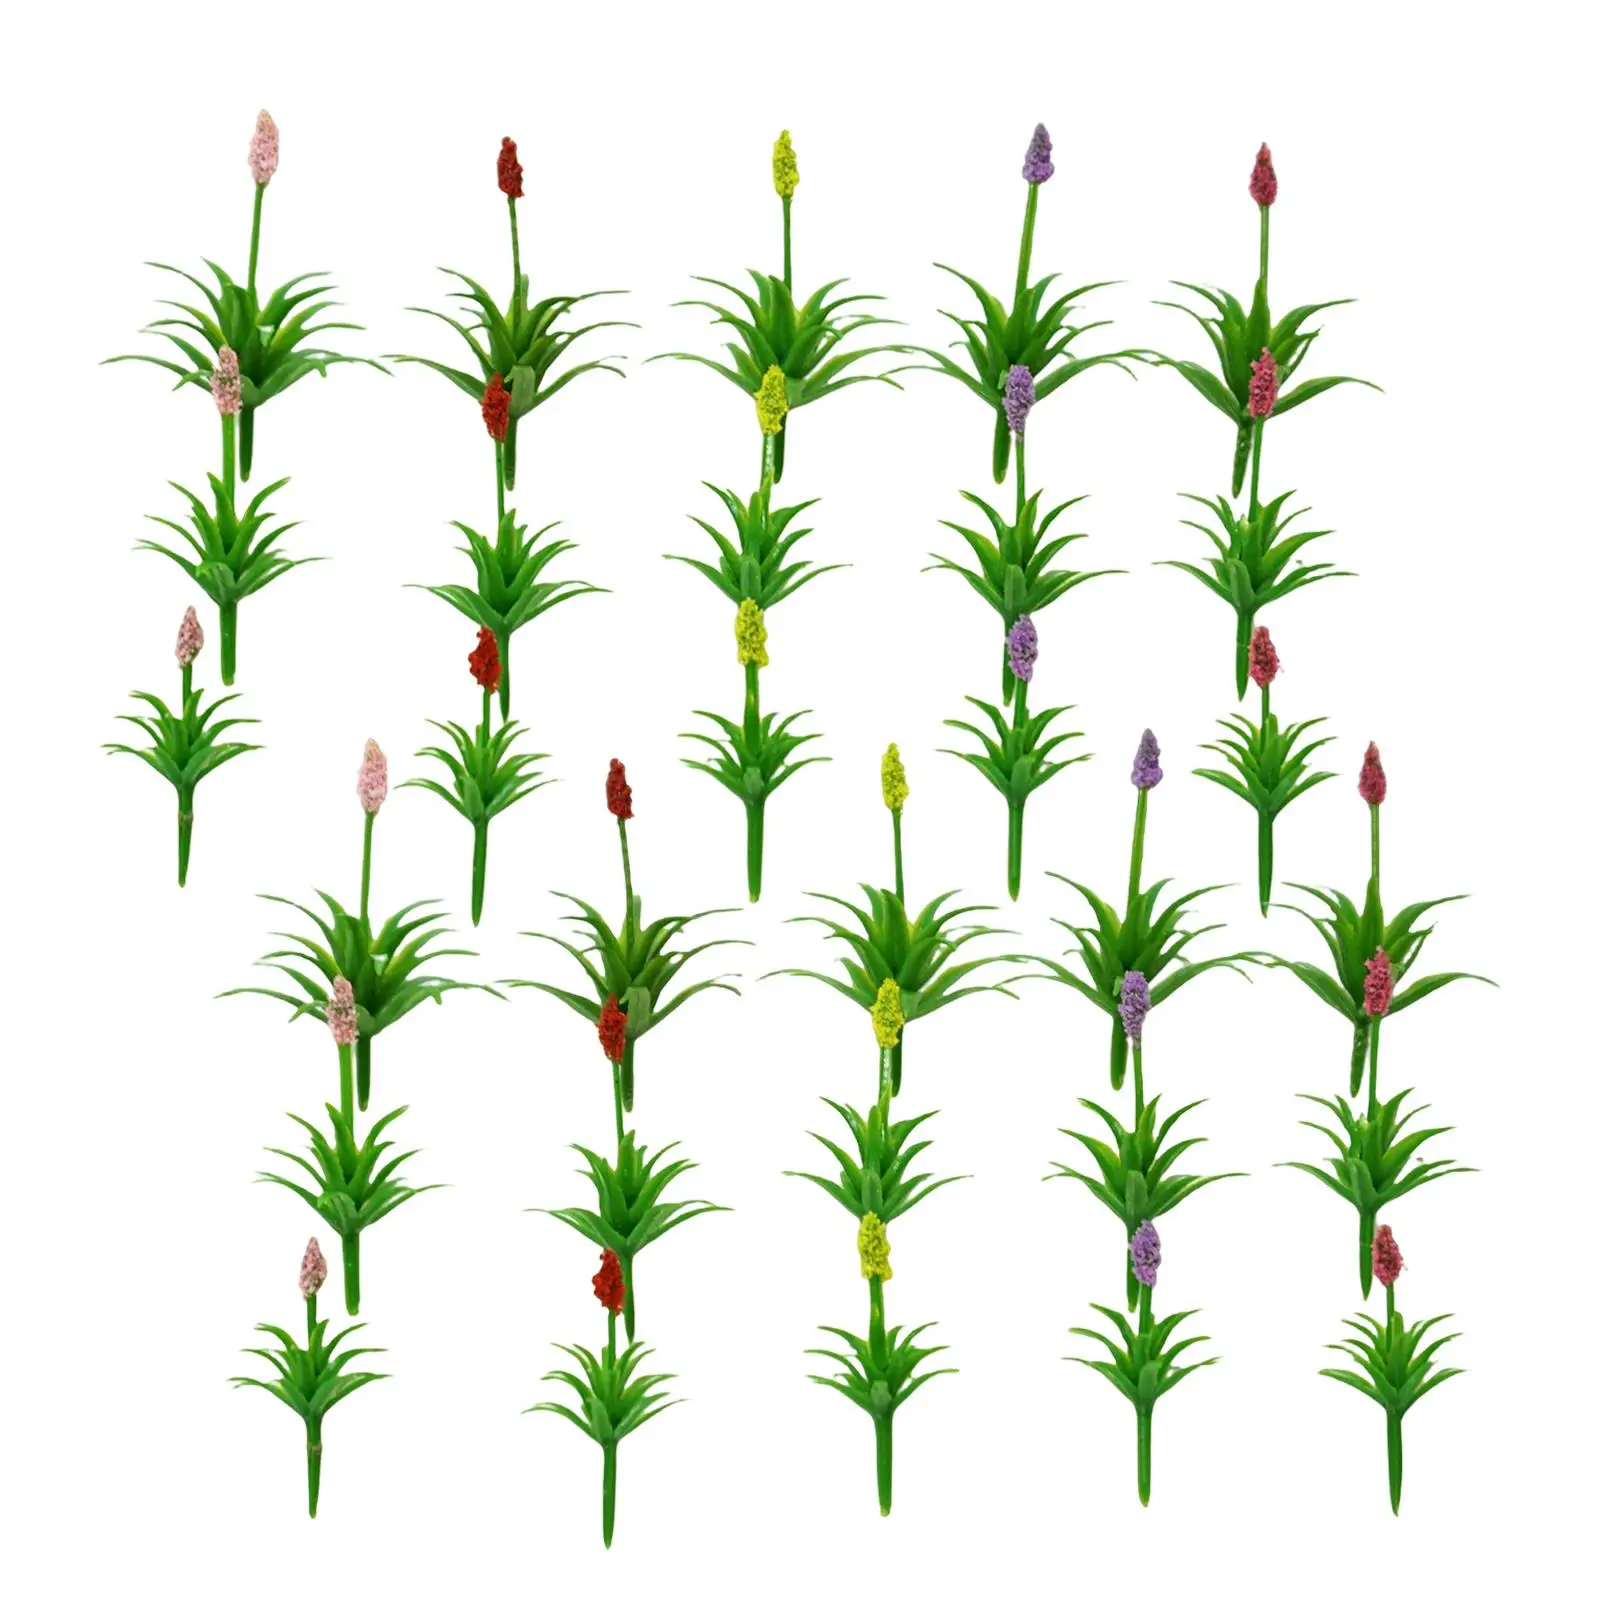 30Pcs DIY Miniature Flower Cluster Vegetation groups Model Diorama Layout Grass Tufts Model for Miniature Scenery Decor